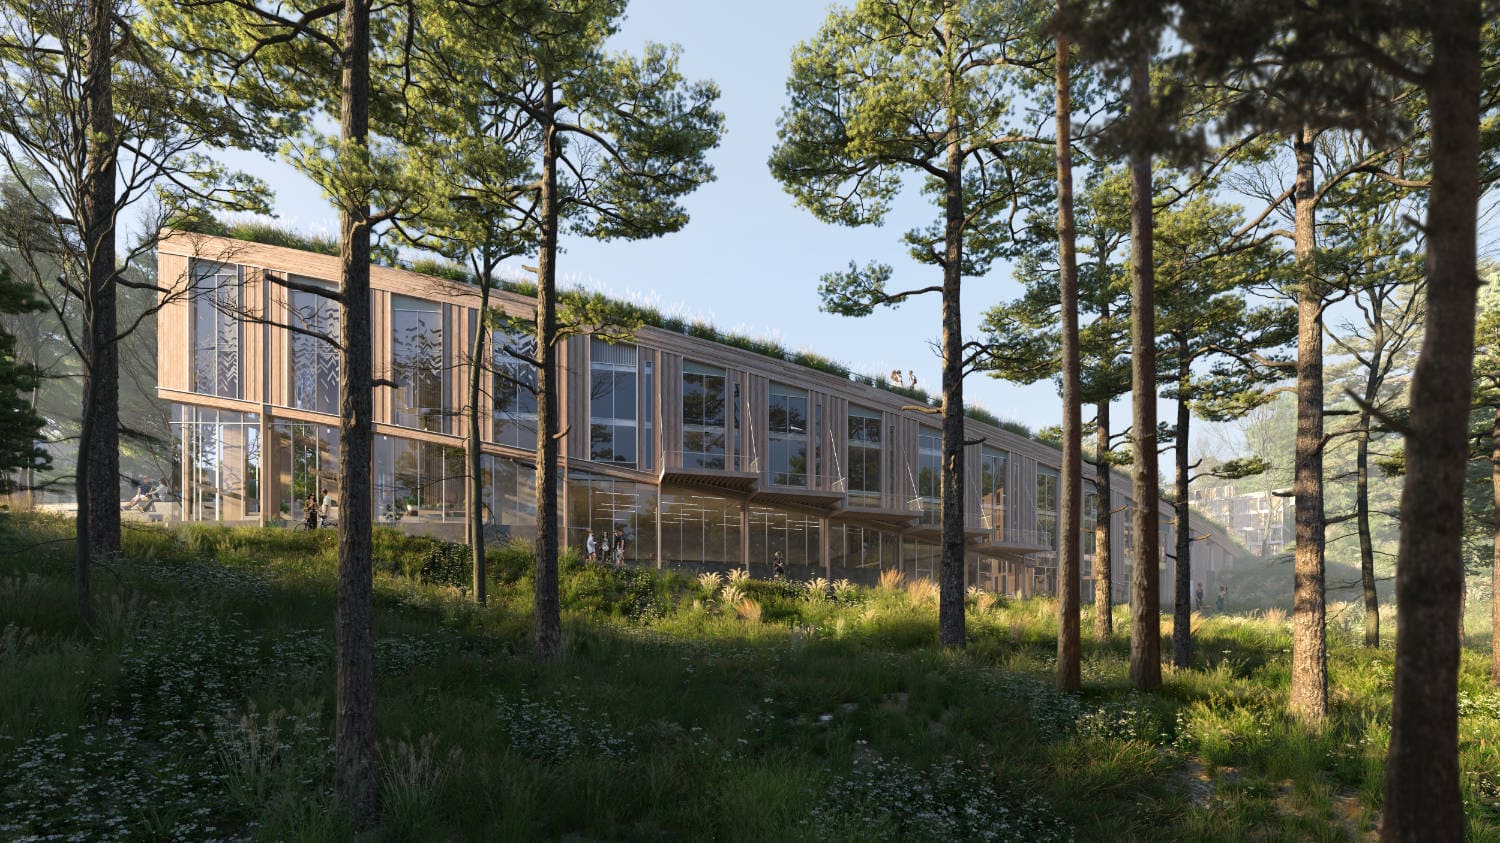 Construction starts for the long-awaited Lakehouse in Wendelstrand, Sweden